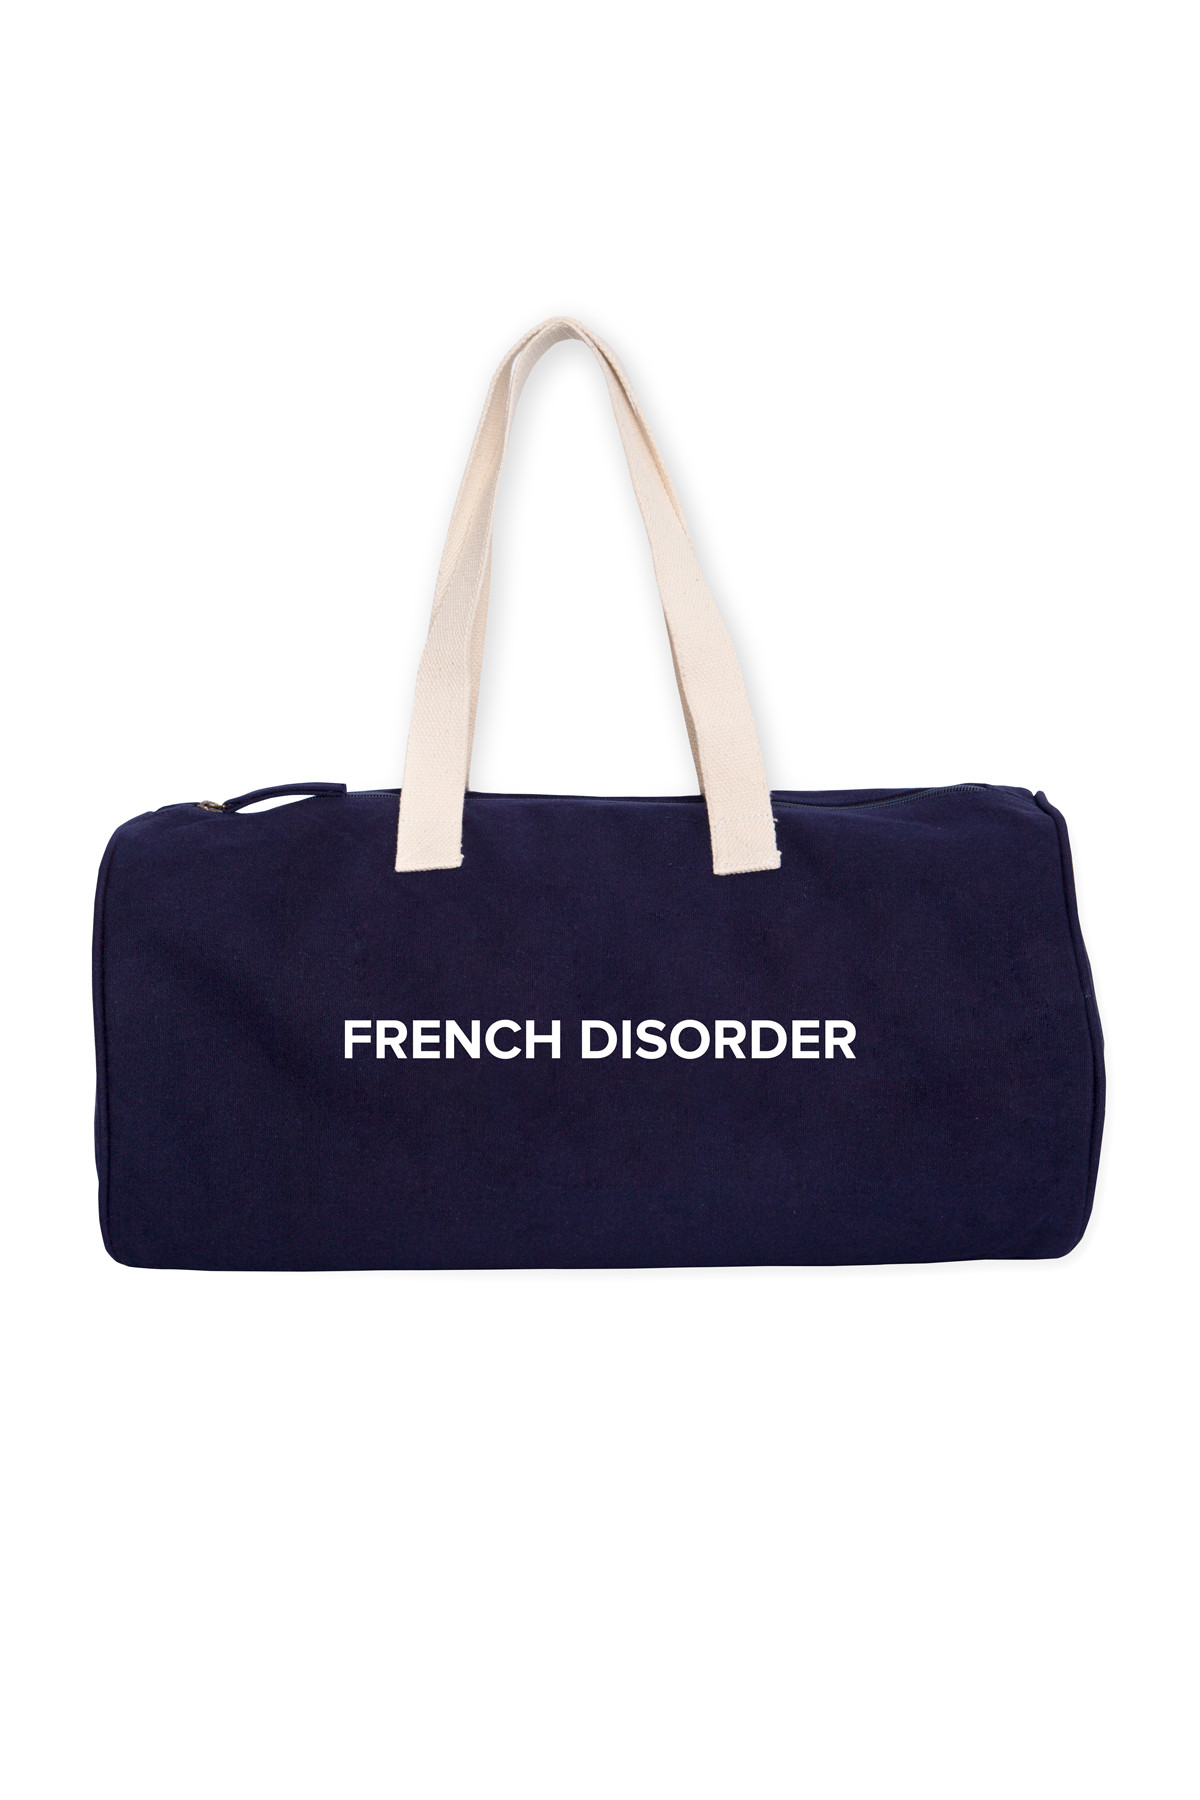 Photo de SACS Duffle Bag FRENCH DISORDER chez French Disorder